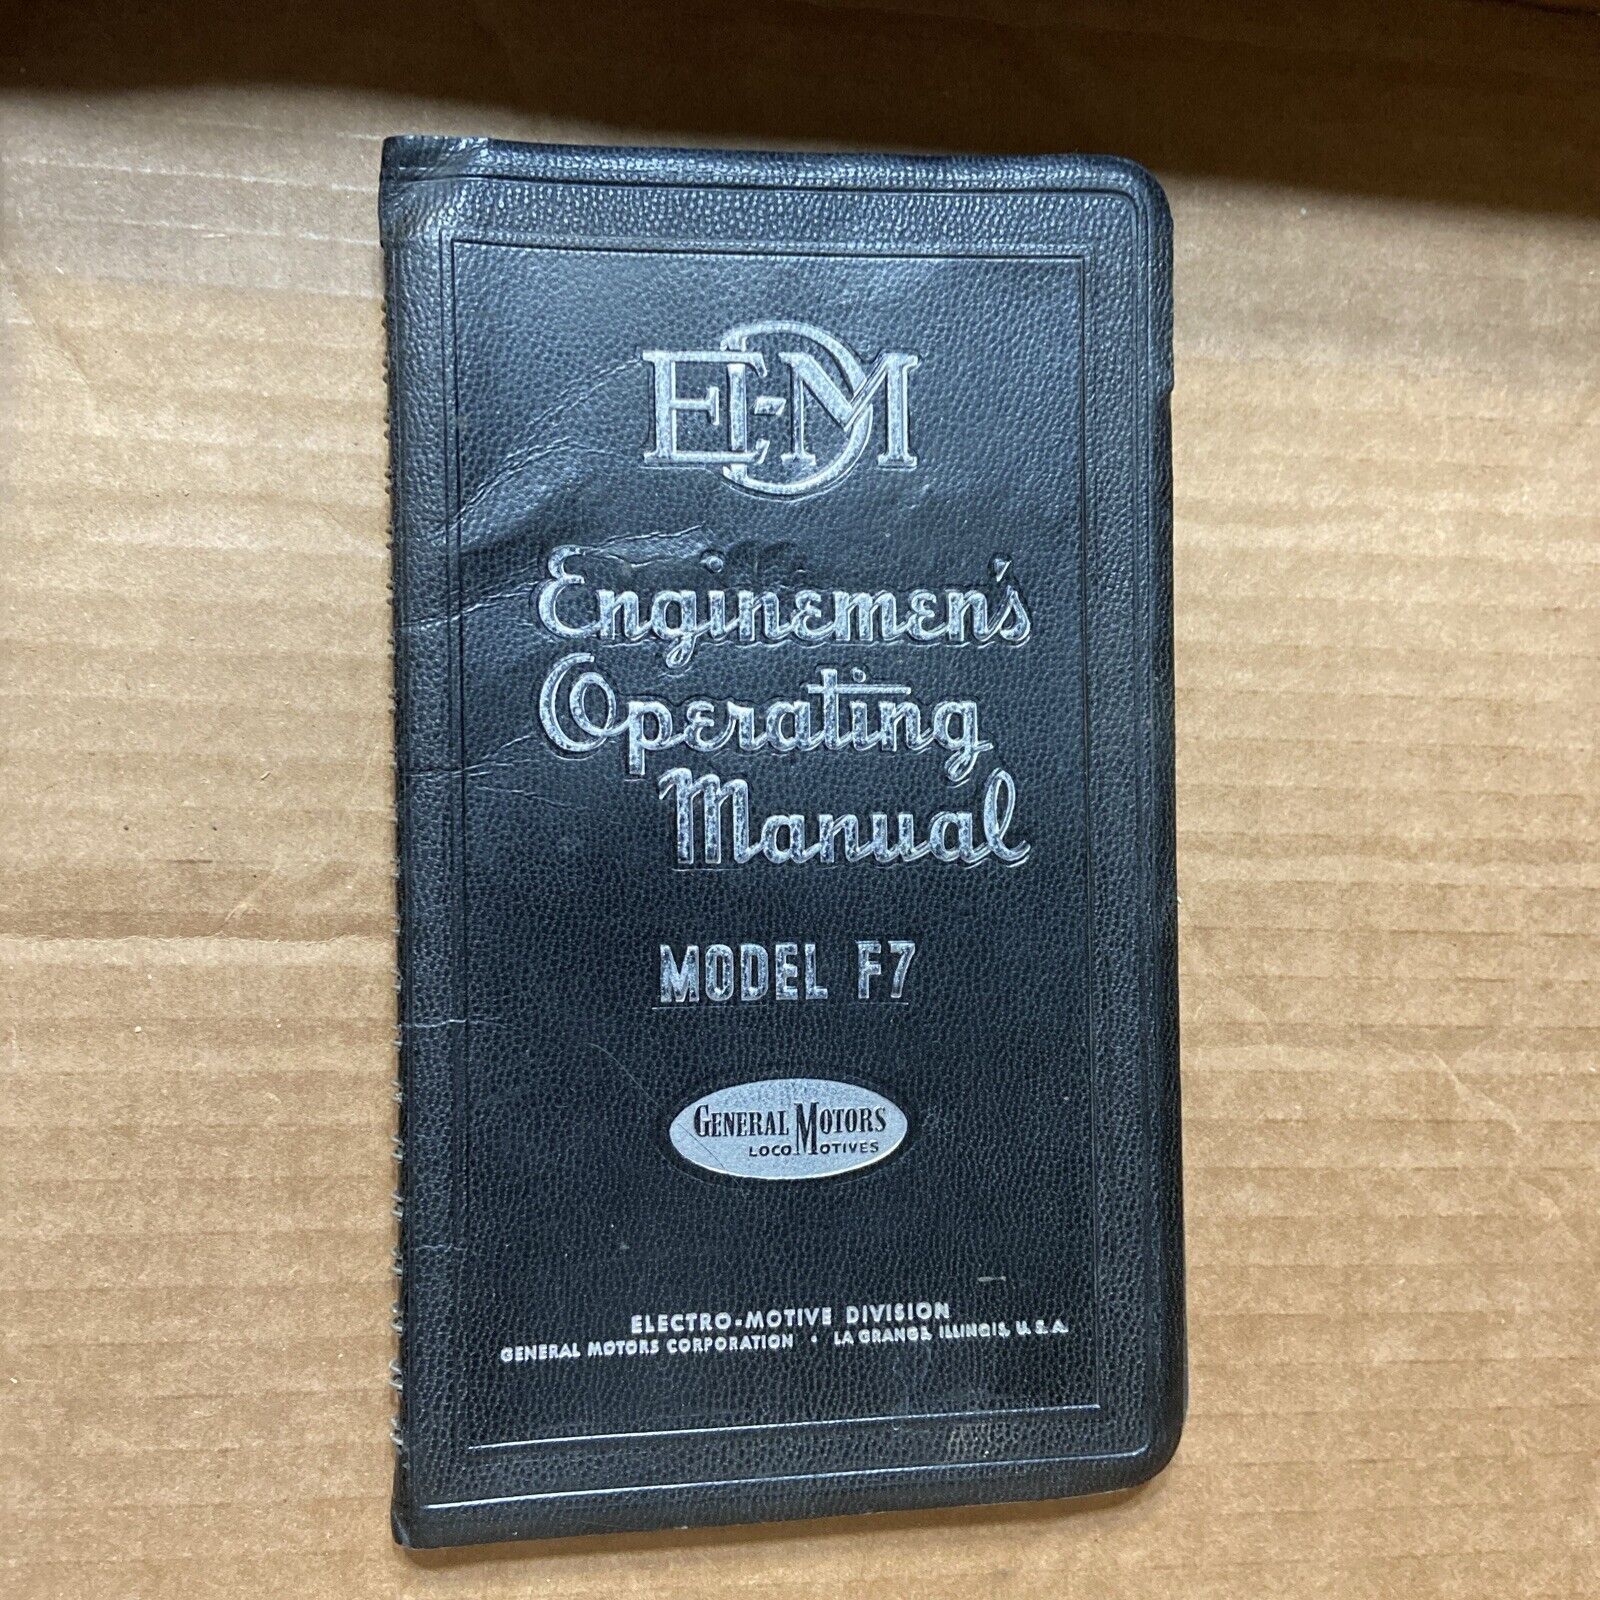 EMD ENGINEMEN'S OPERATING MANUAL NO 2310 FOR MODEL F7 (1949)) - GENERAL MOTORS